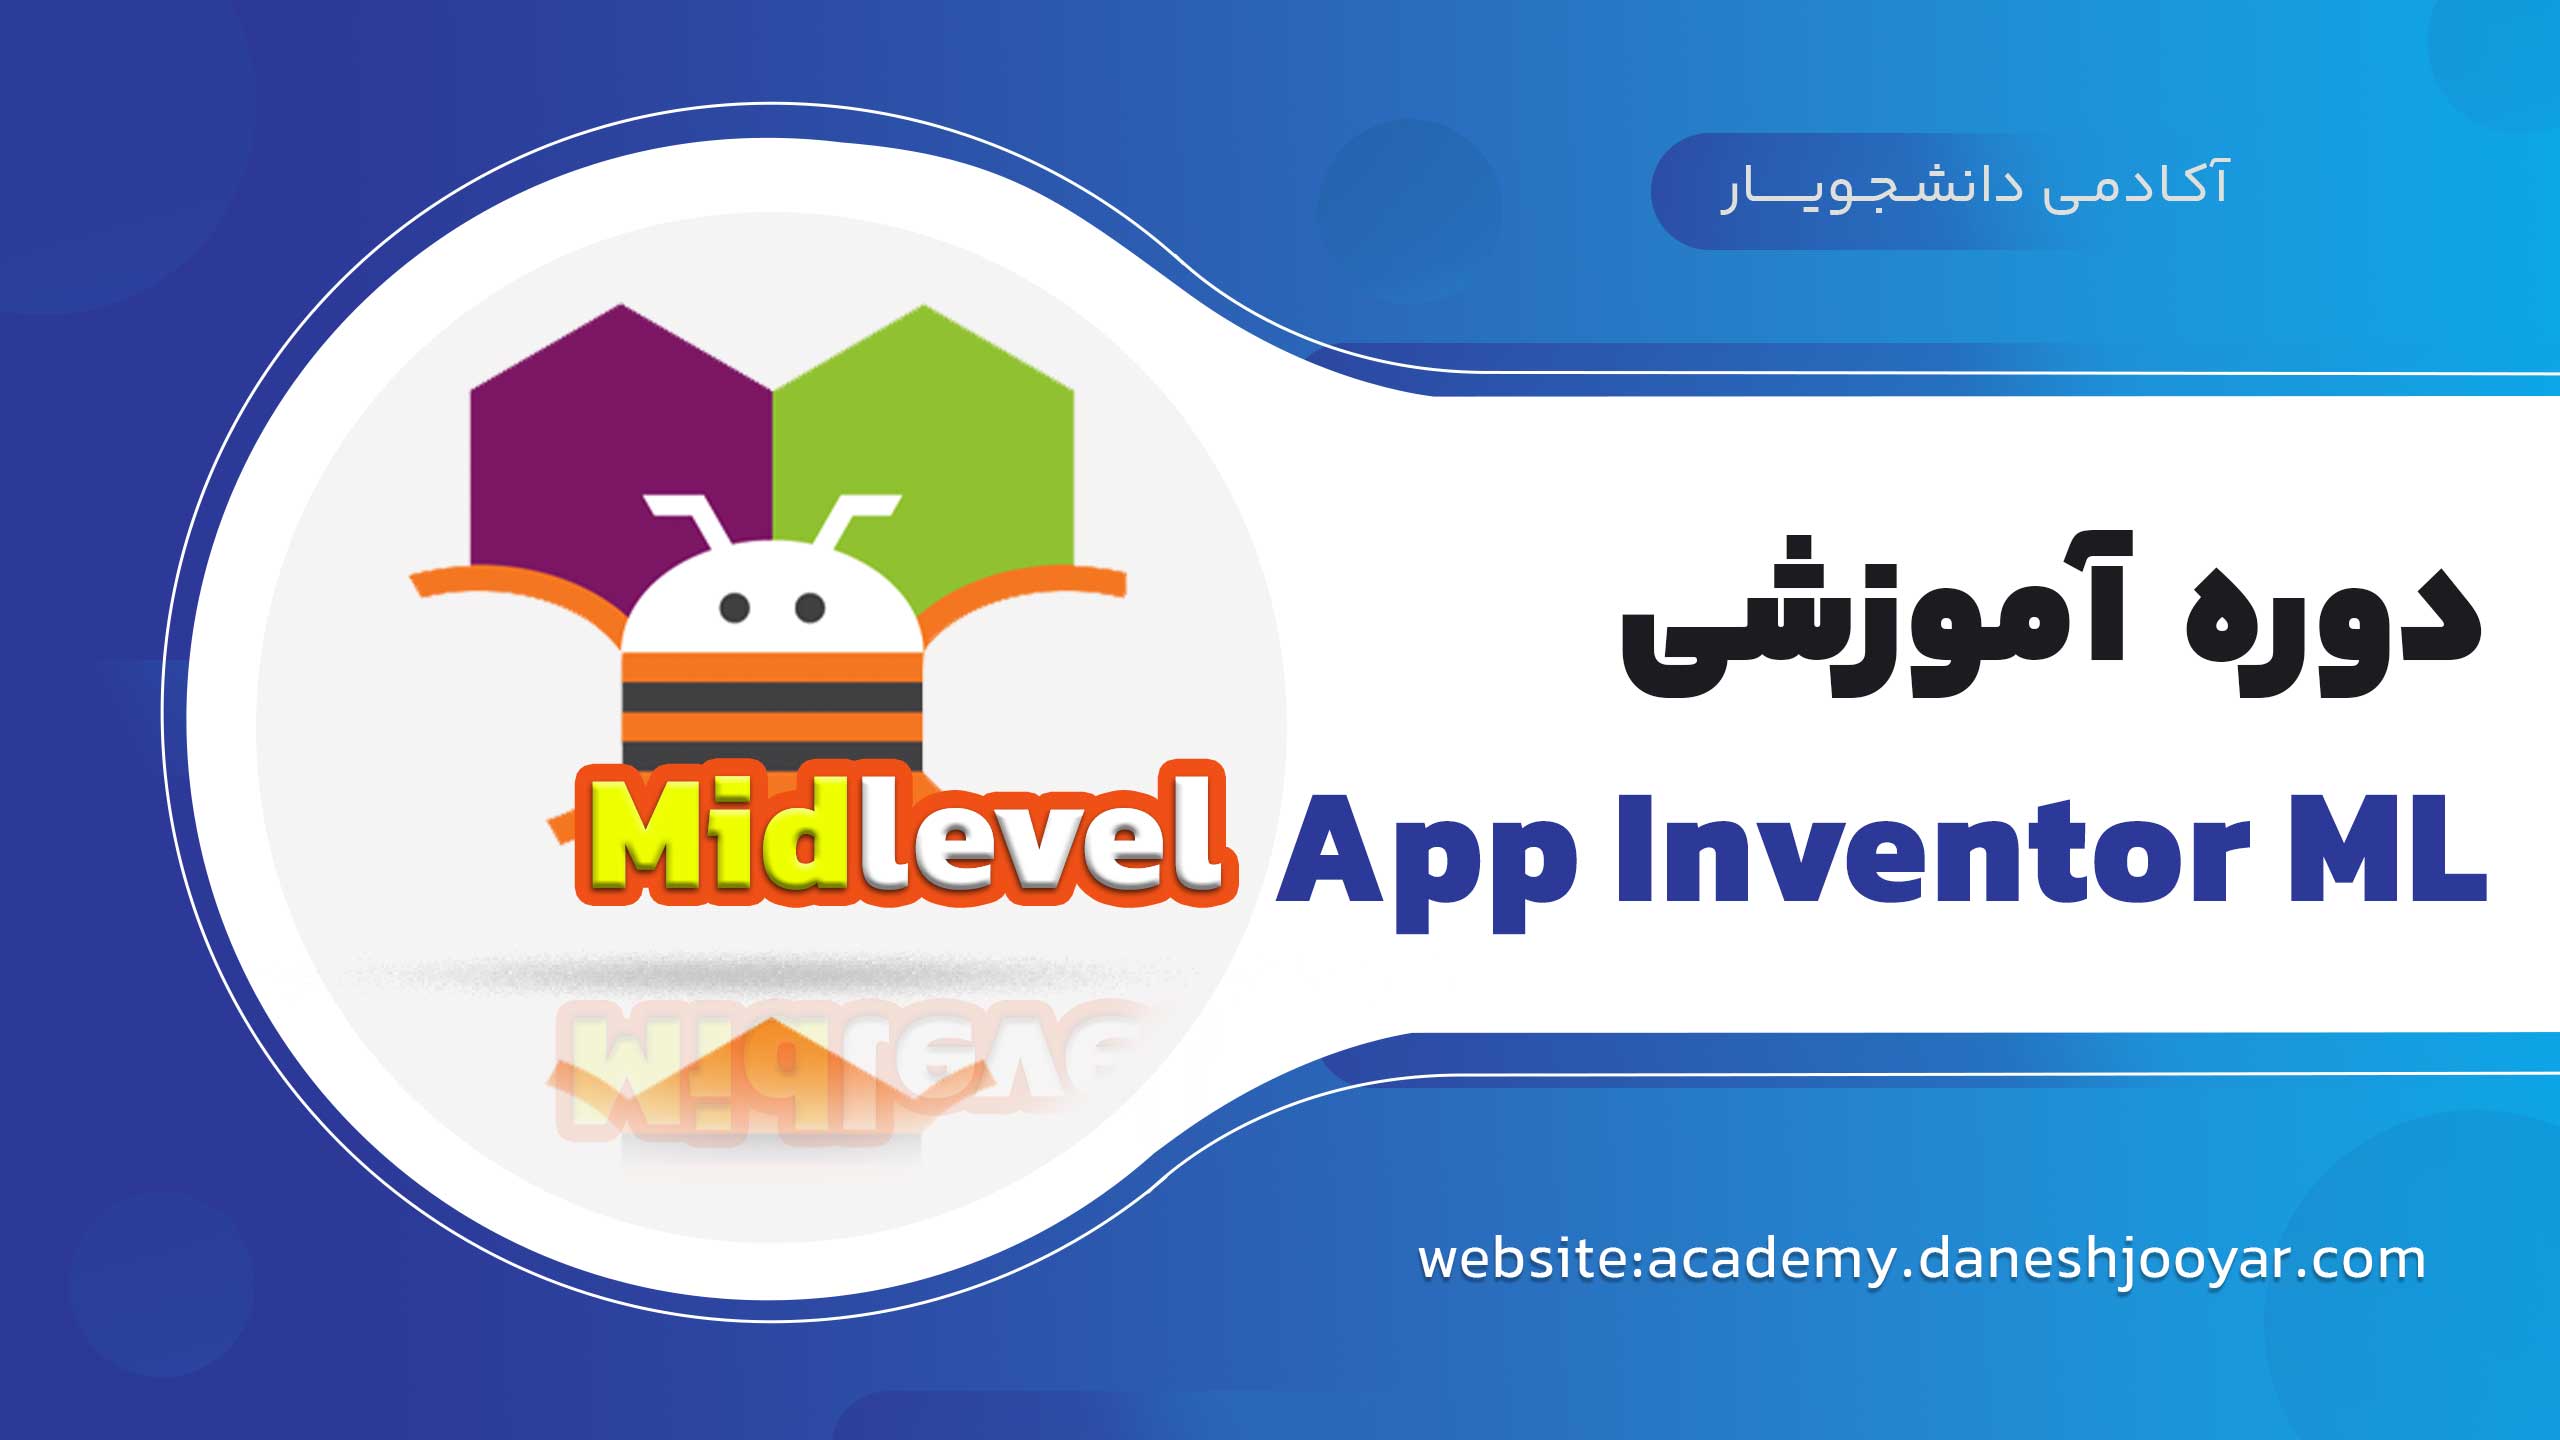 App inventor Midlevel